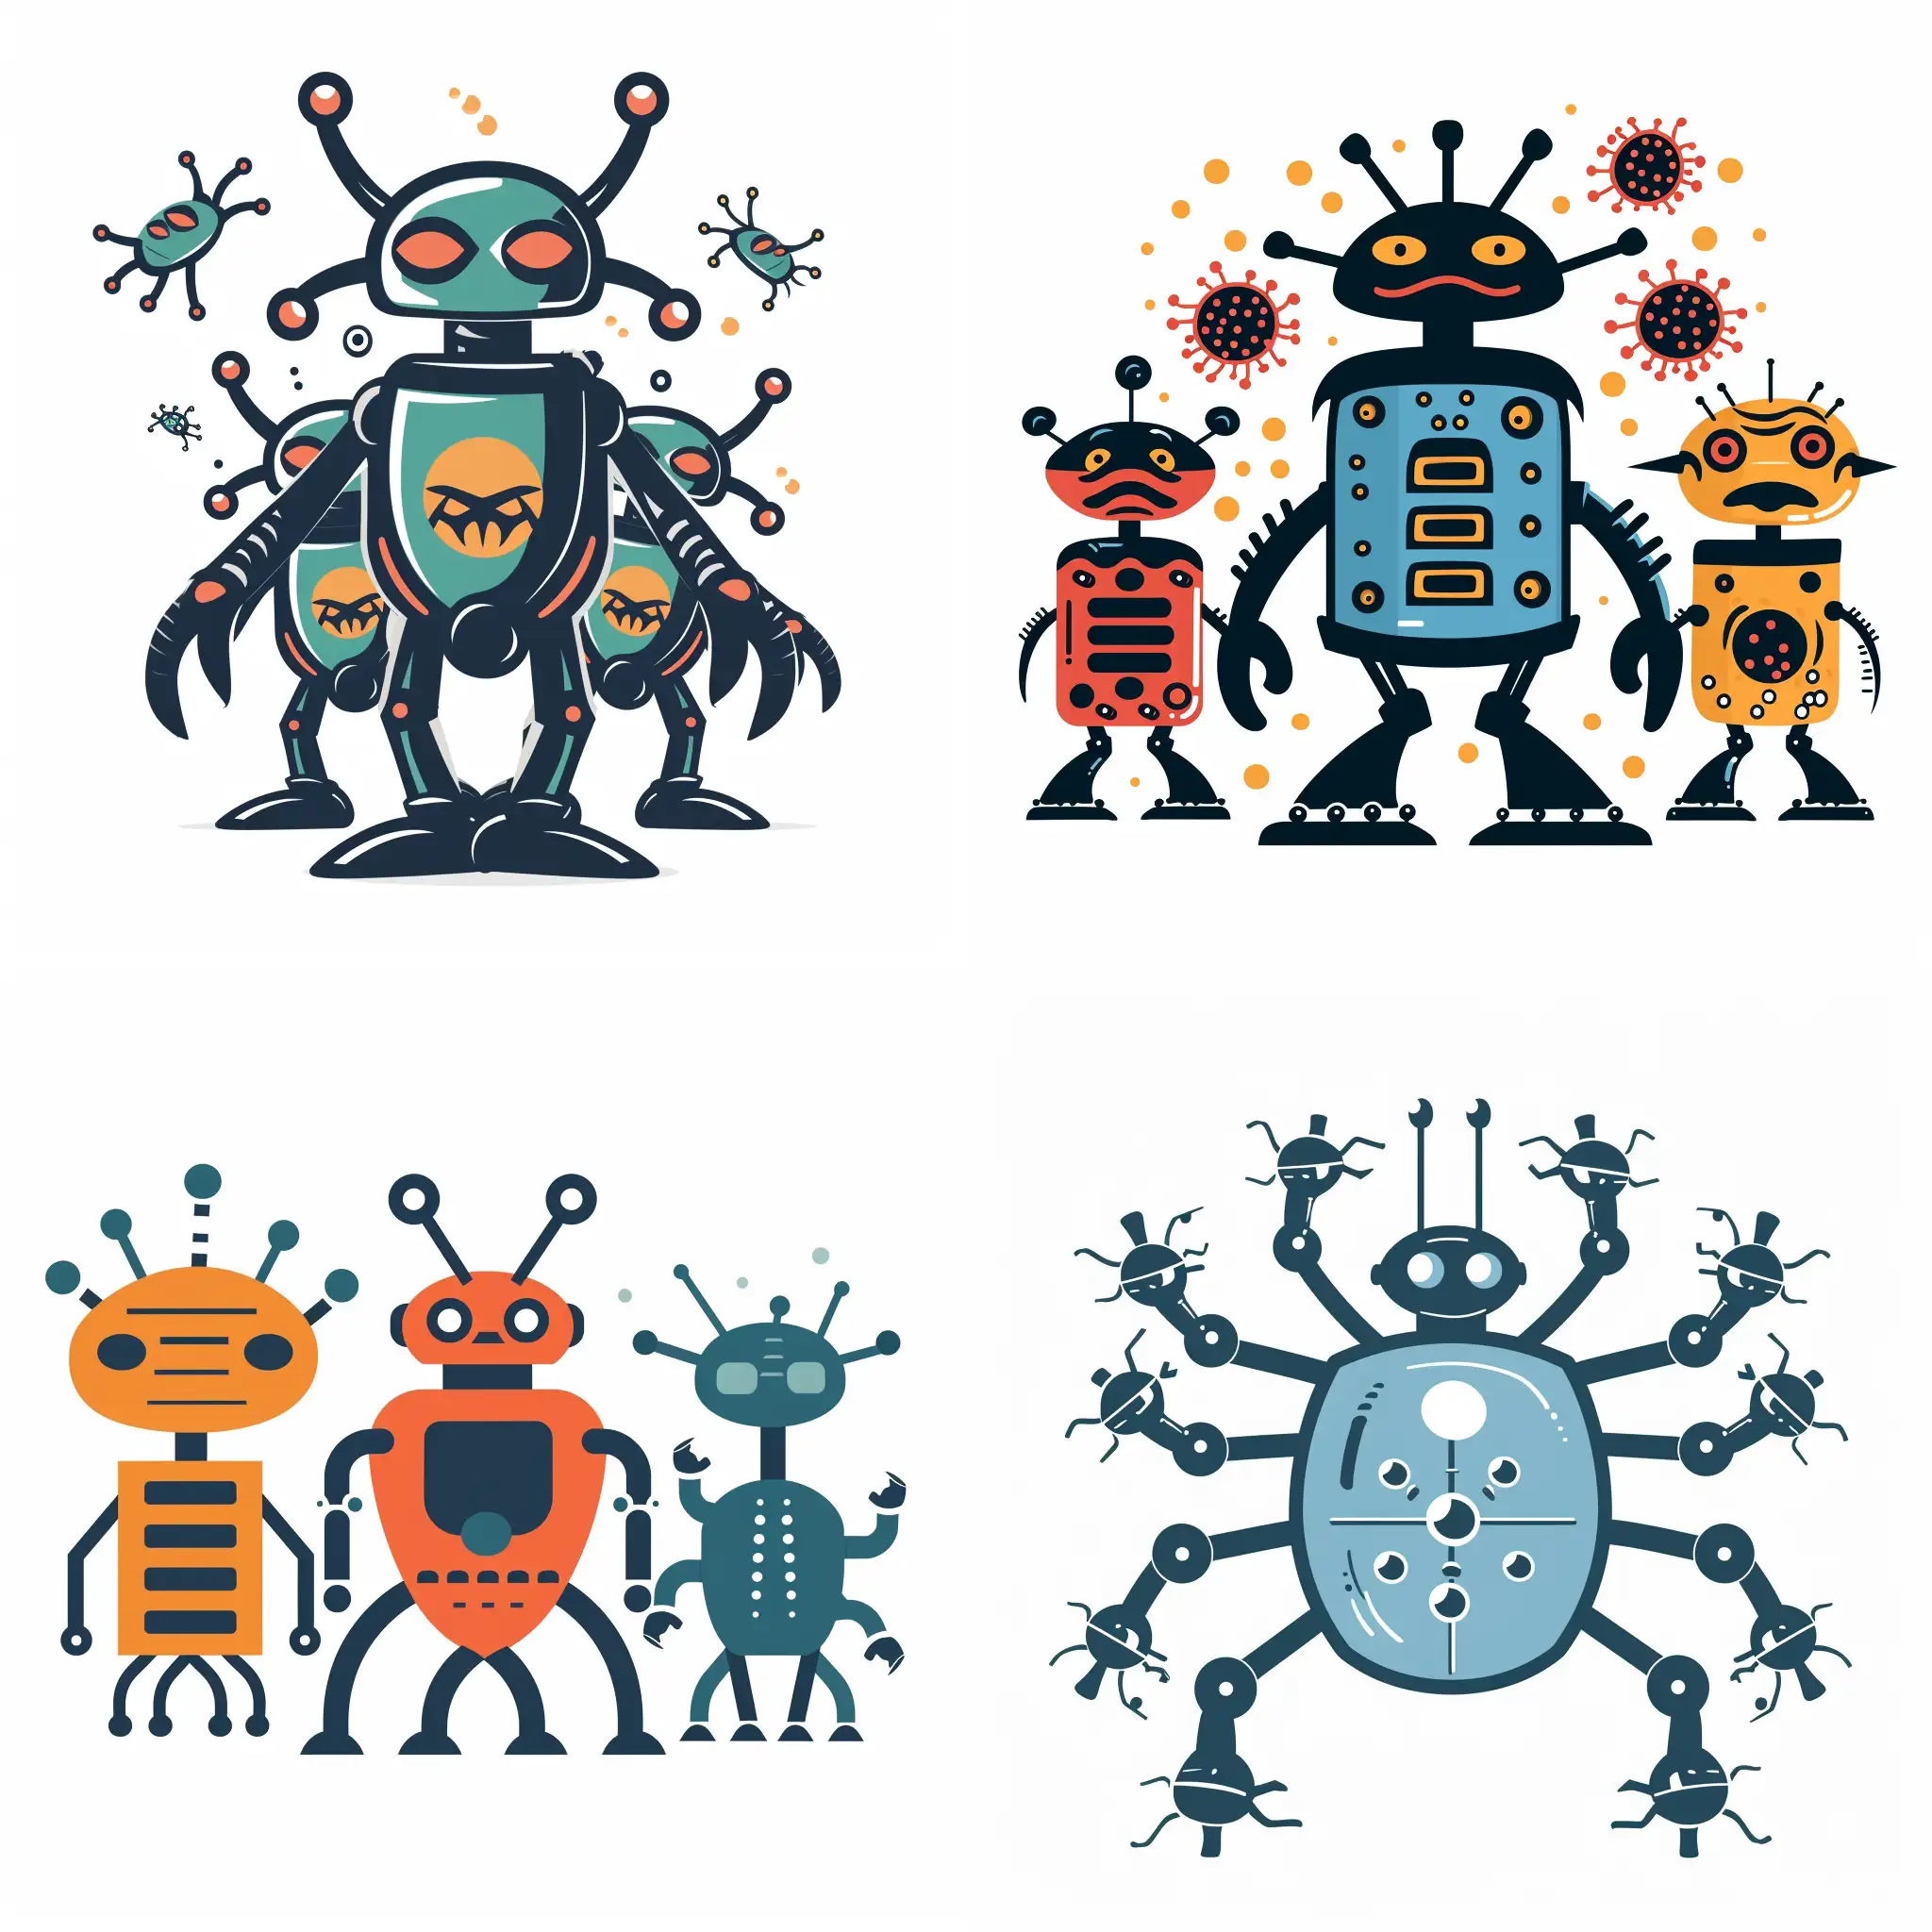 Malware-Robots-Graphic-Logo-on-White-Background